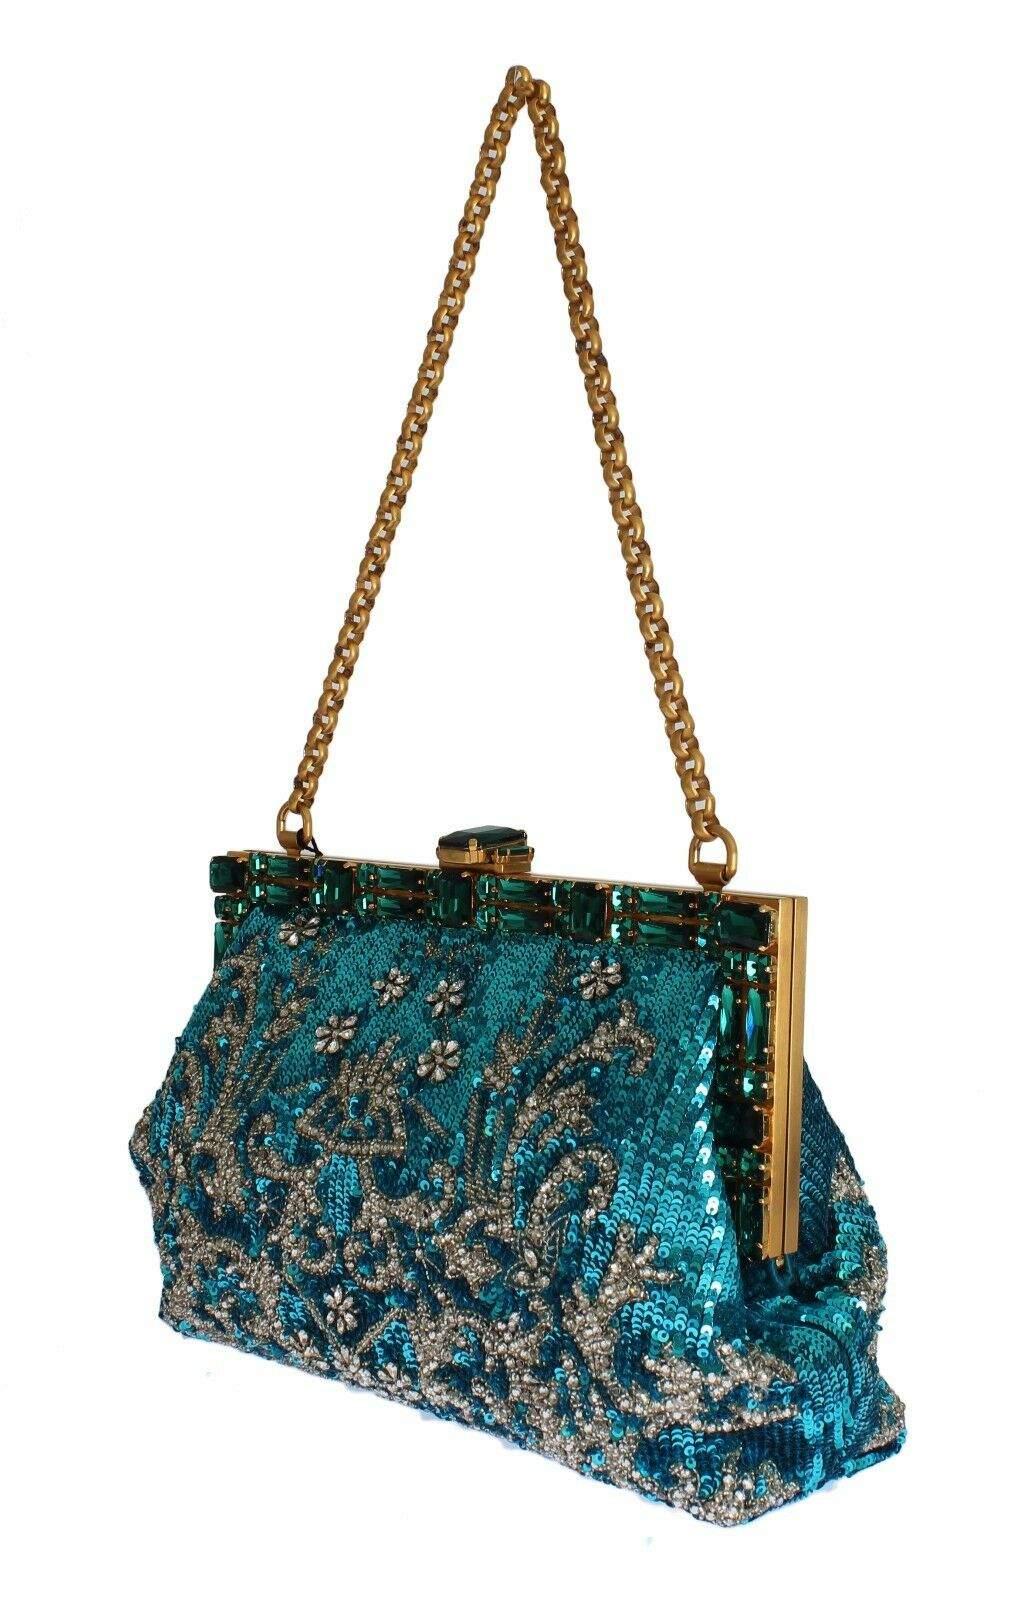 Dolce & Gabbana Clear Crystal Gold Evening Clutch Purse in Blue